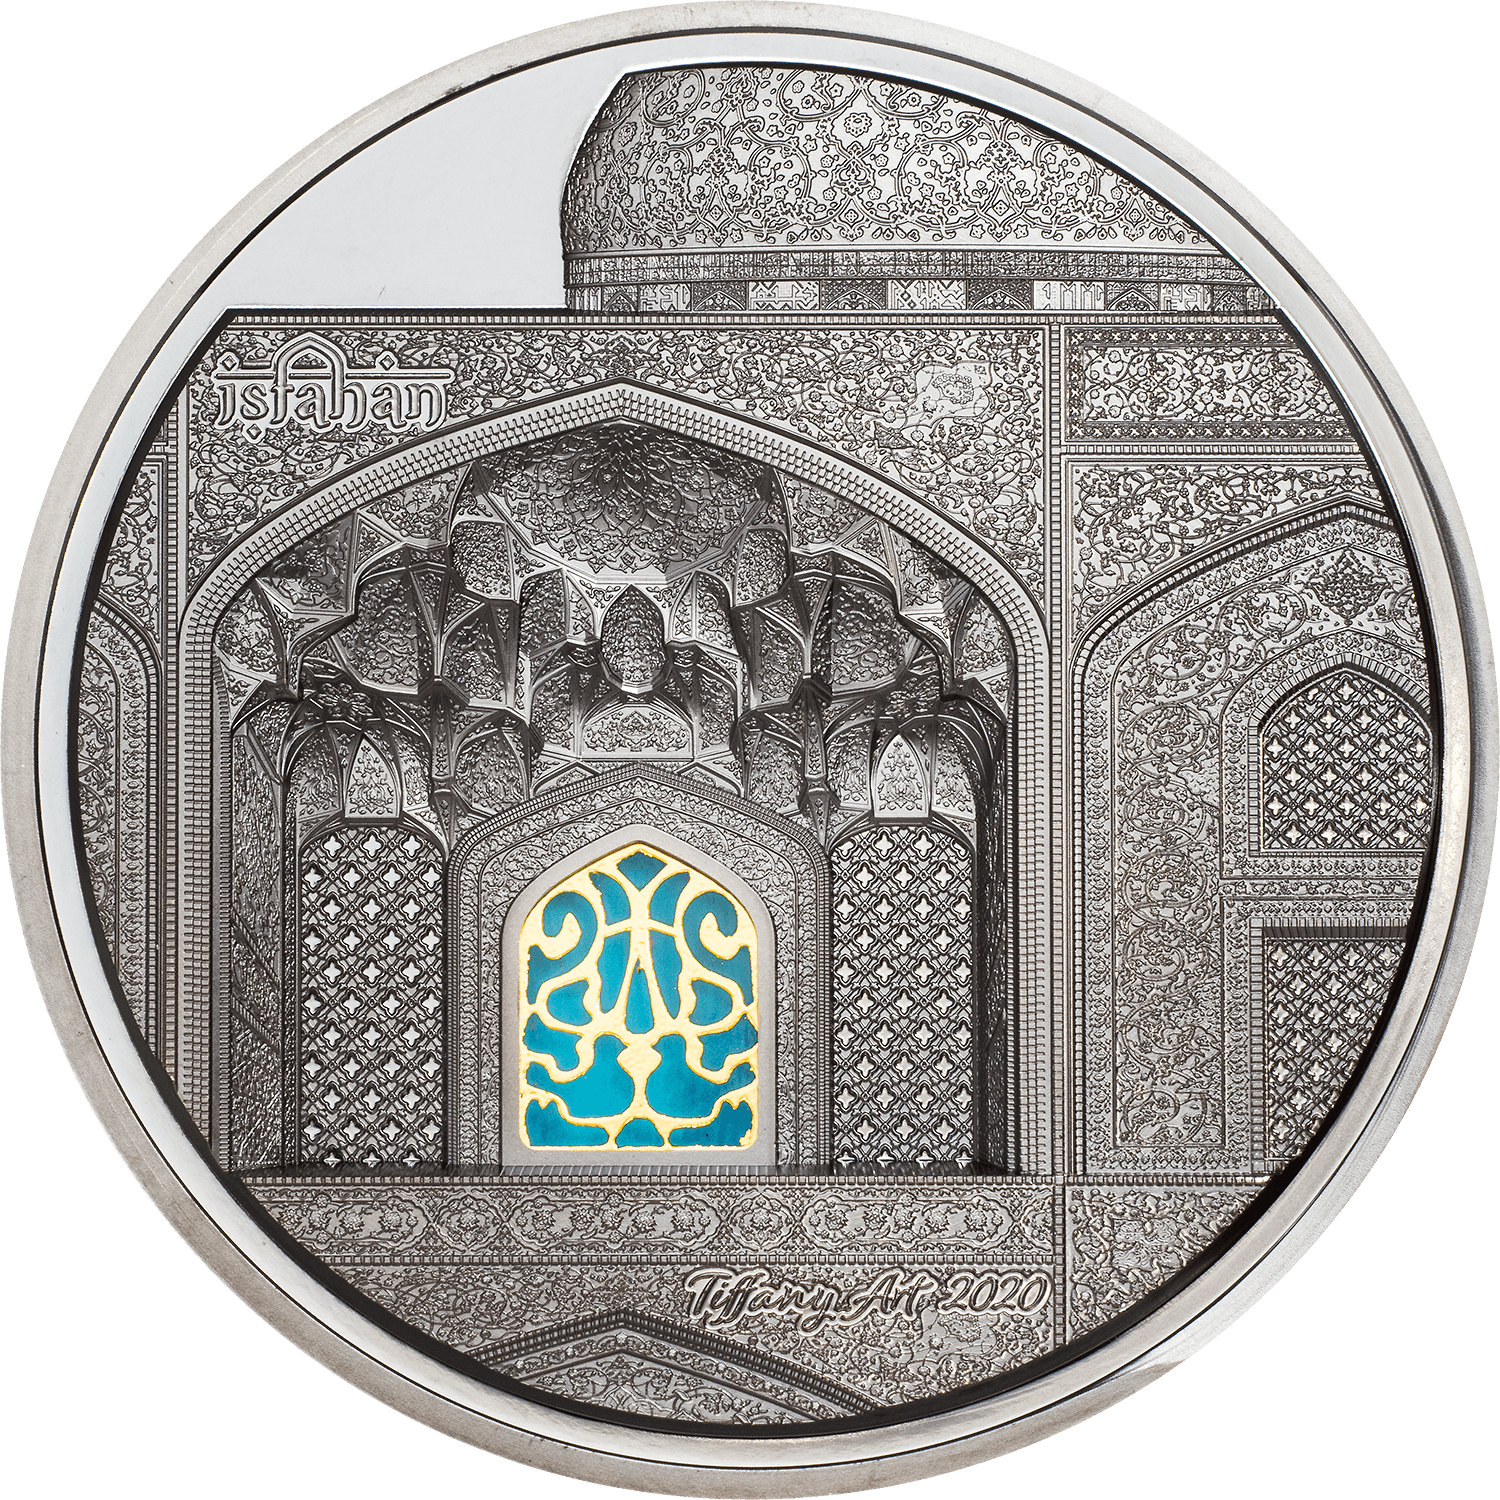 TIFFANY ART Isfahan 5 Oz Silver Coin $25 Palau 2020 - PARTHAVA COIN